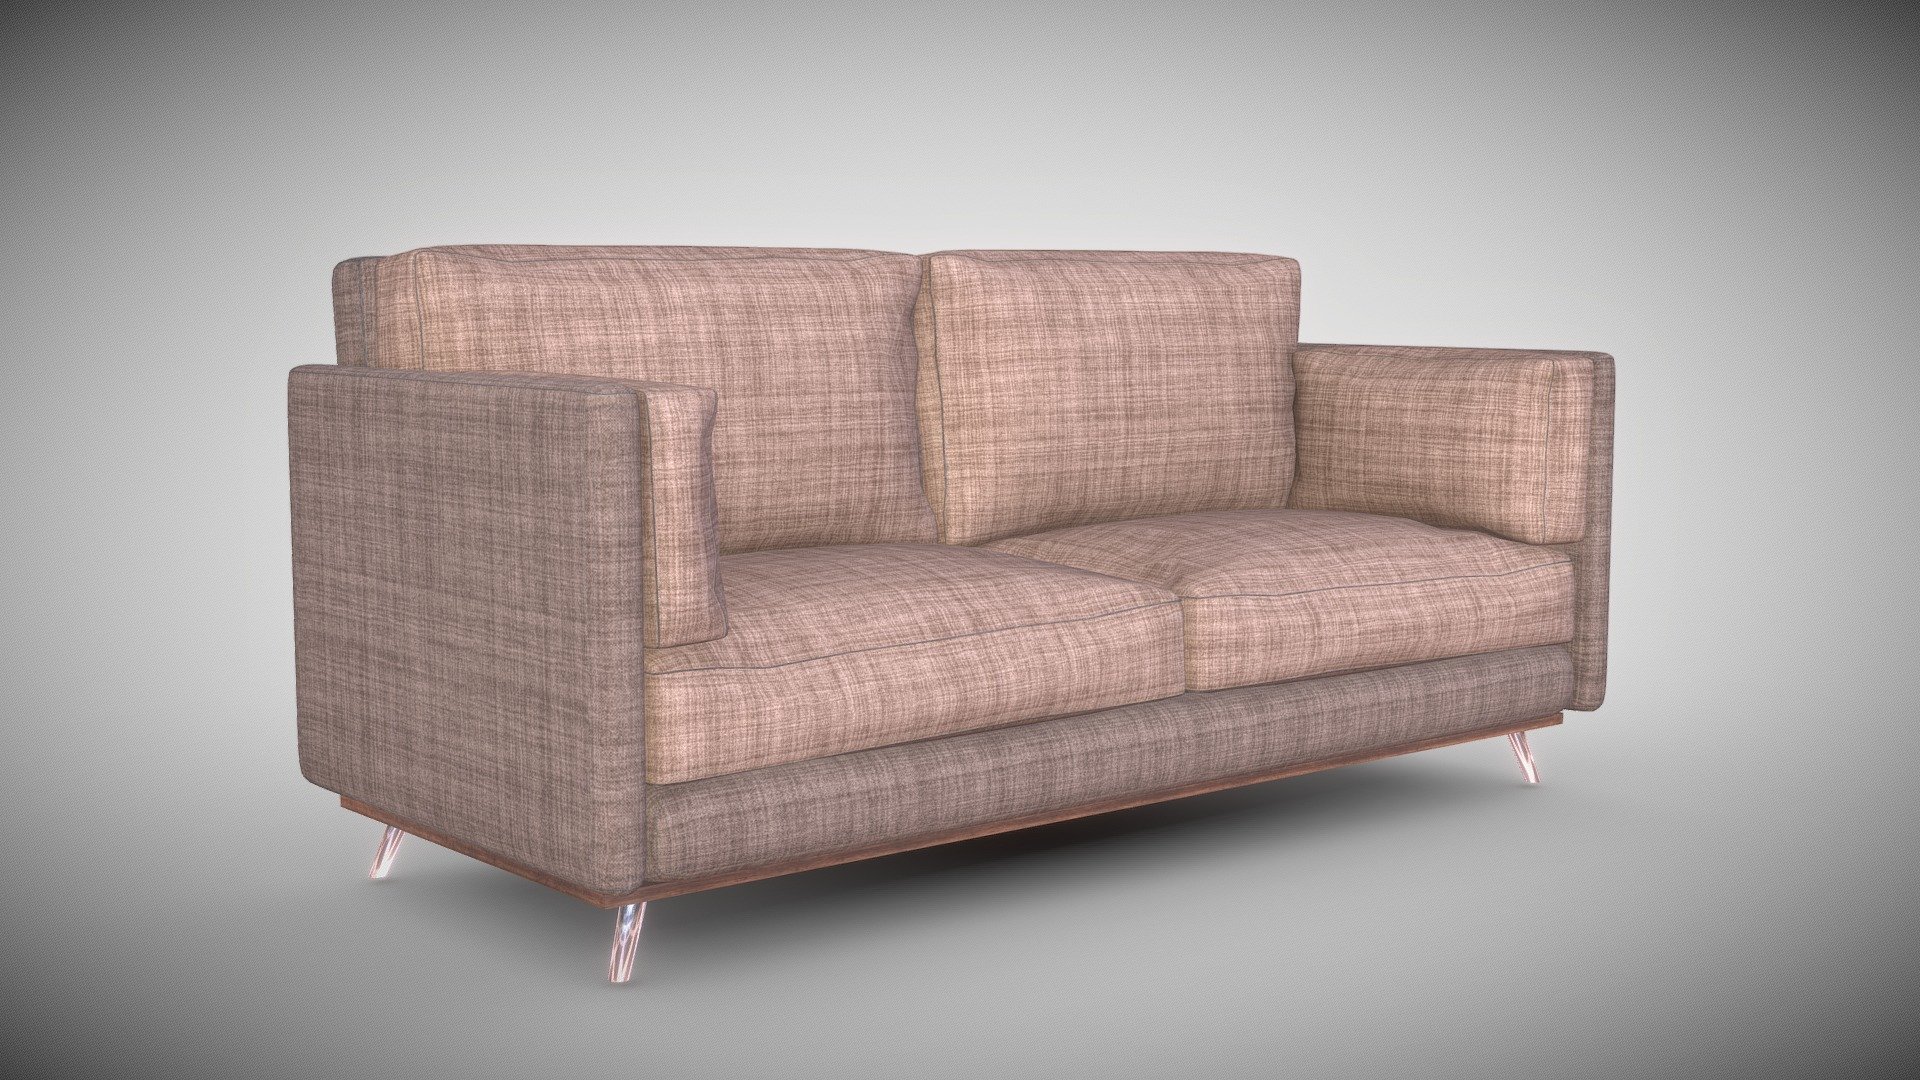 A basic sofa